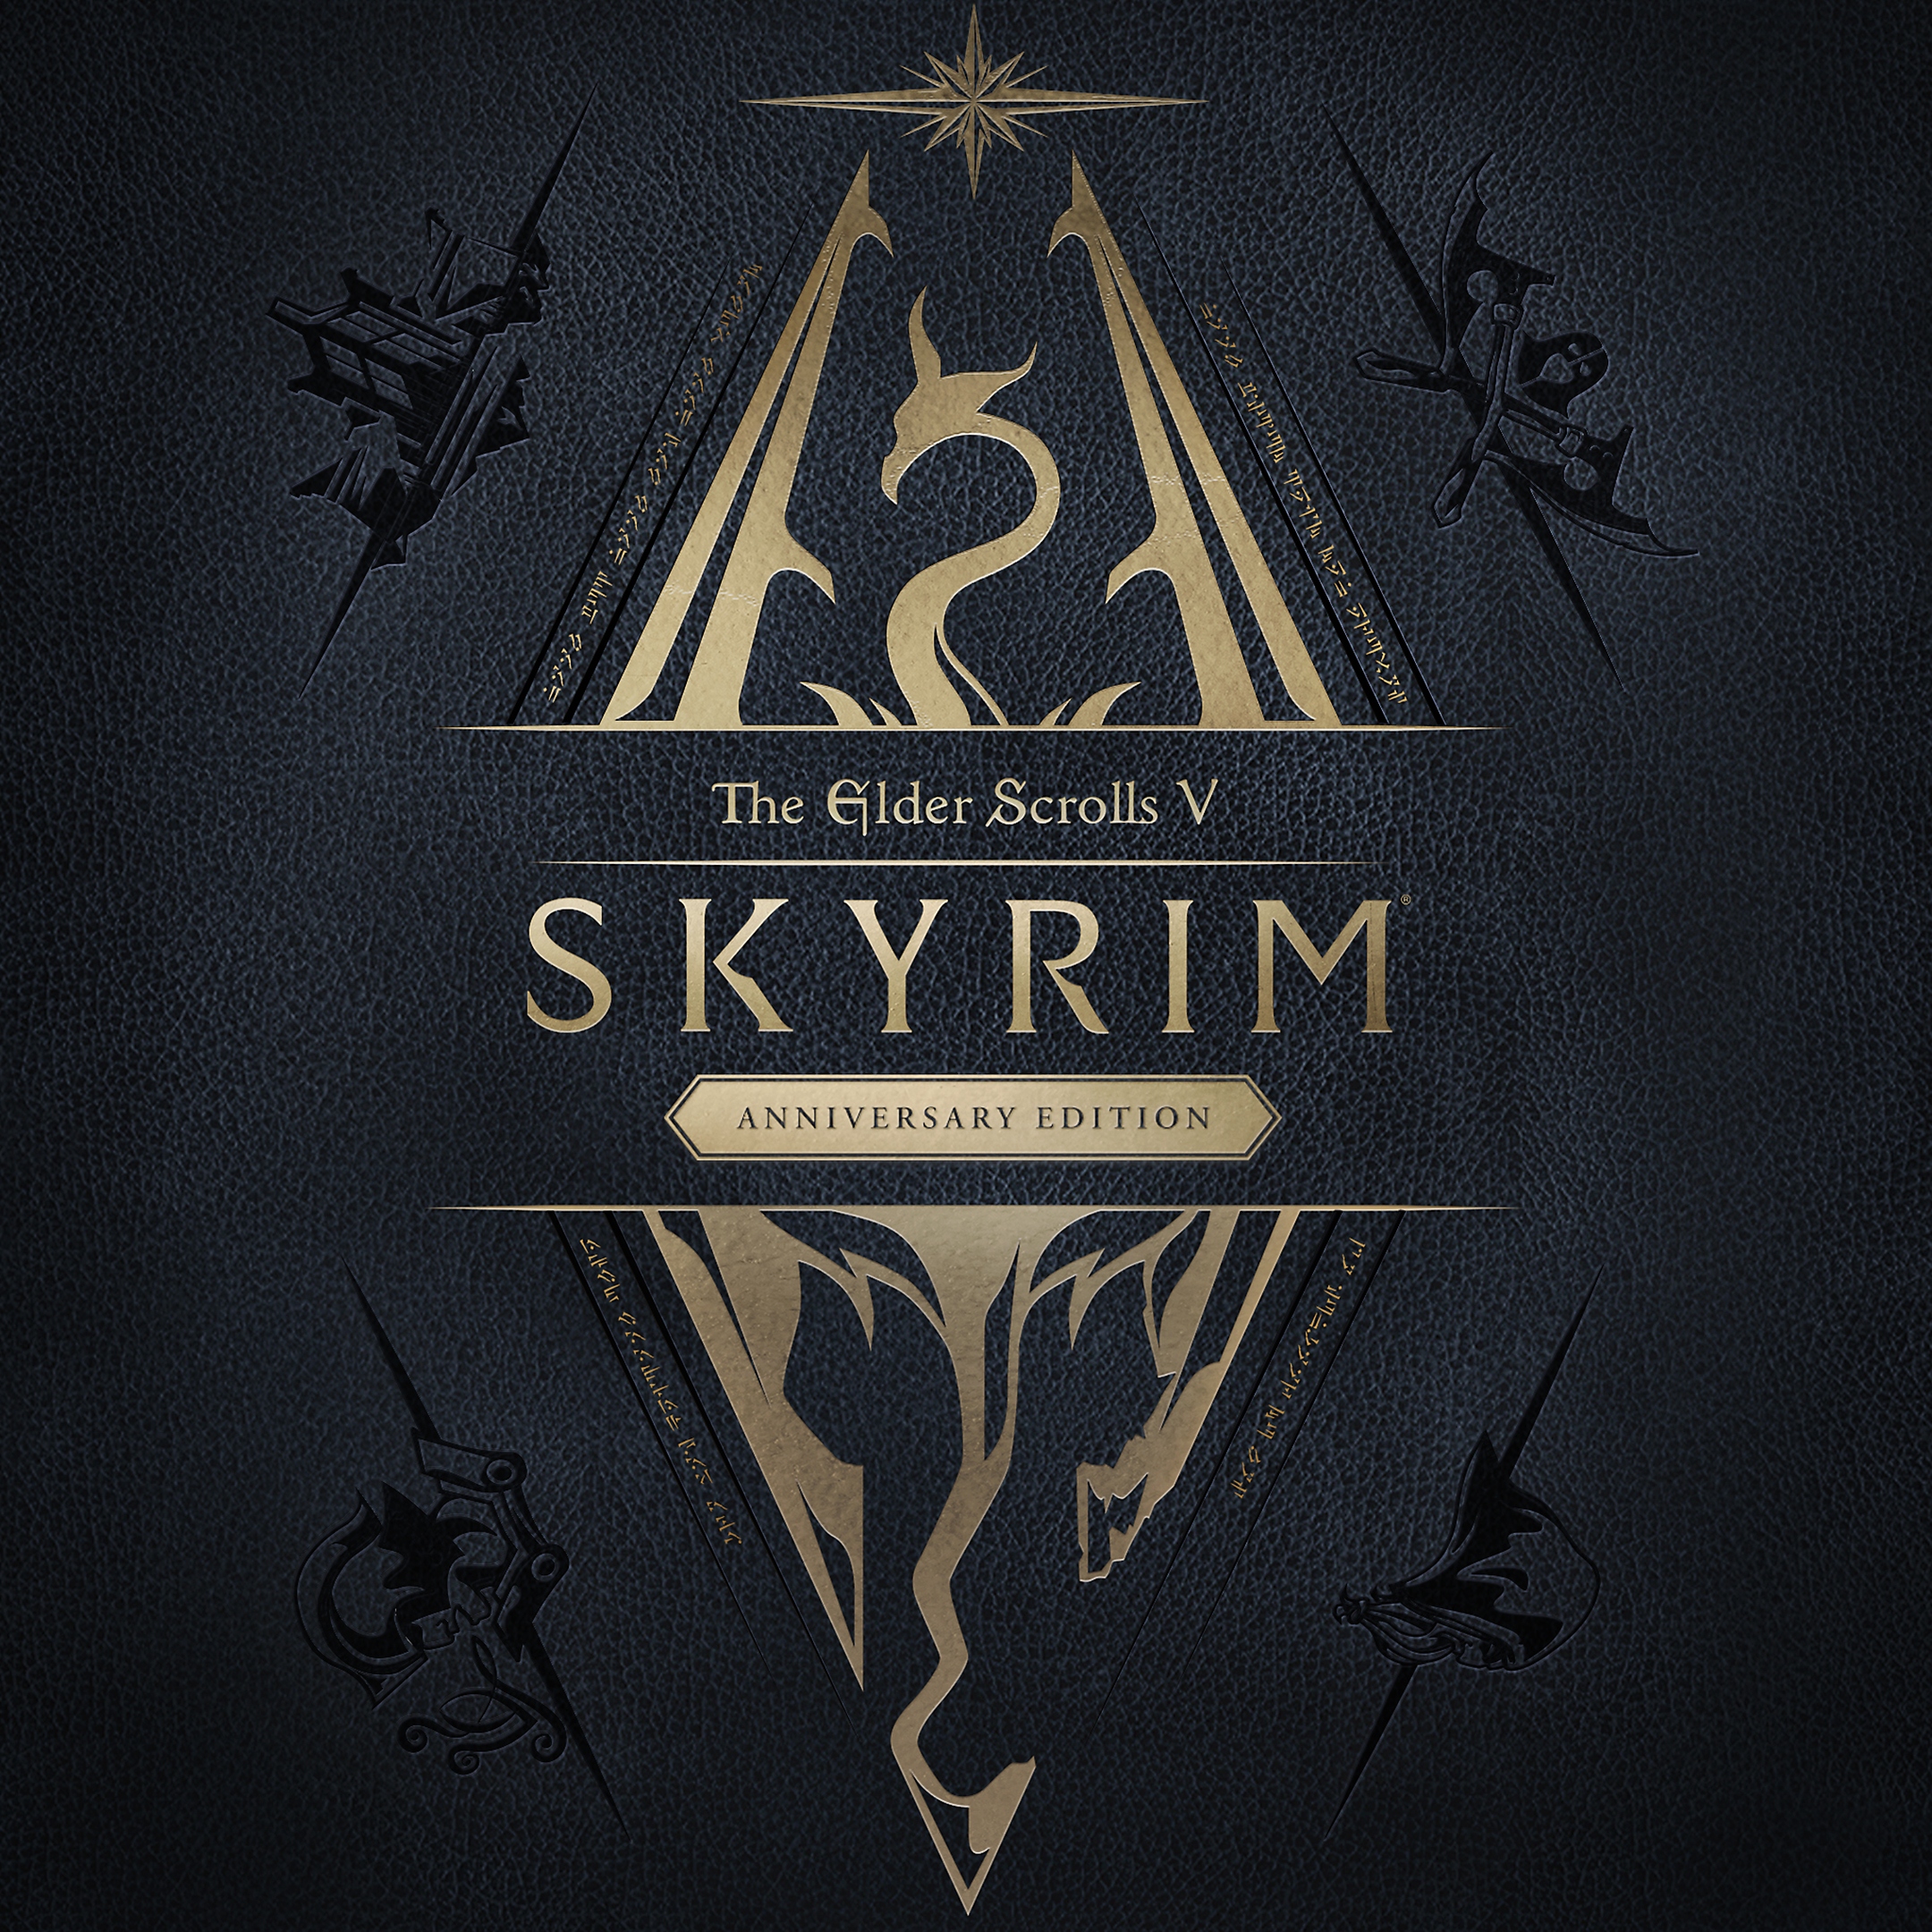 The Elder Scrolls V: Foto del paquete de Skyrim Anniversary Edition